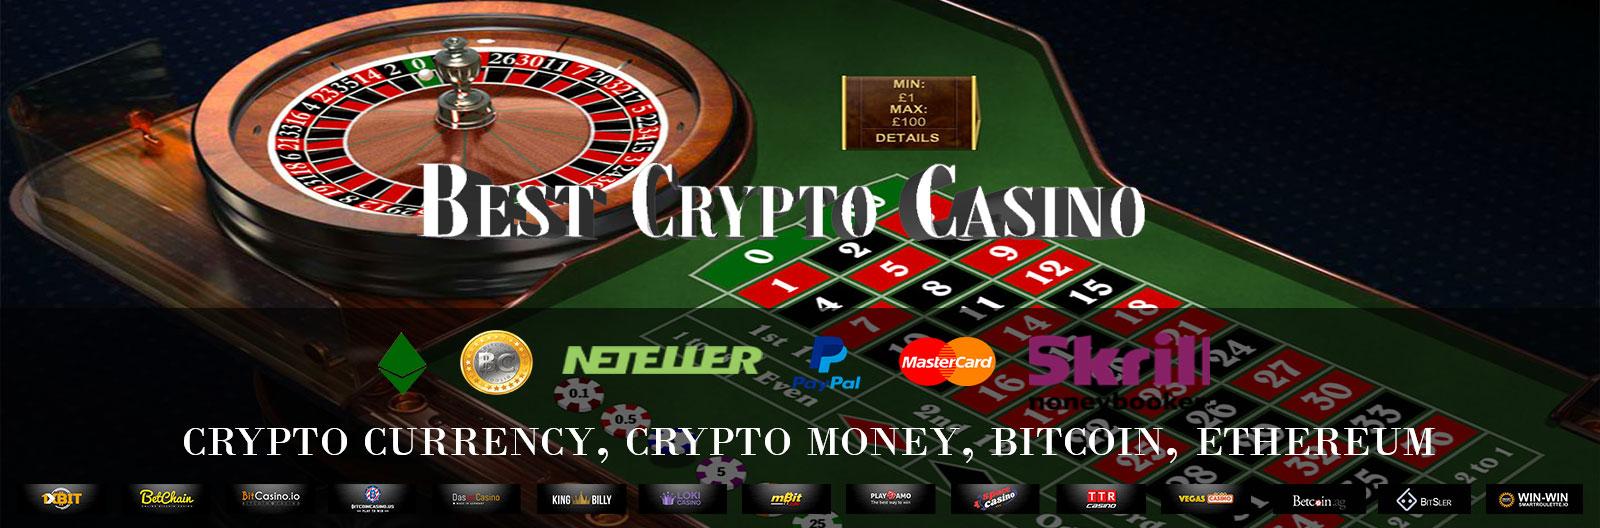 Best bitcoin slot machines to play at rivers bitcoin casino pittsburgh